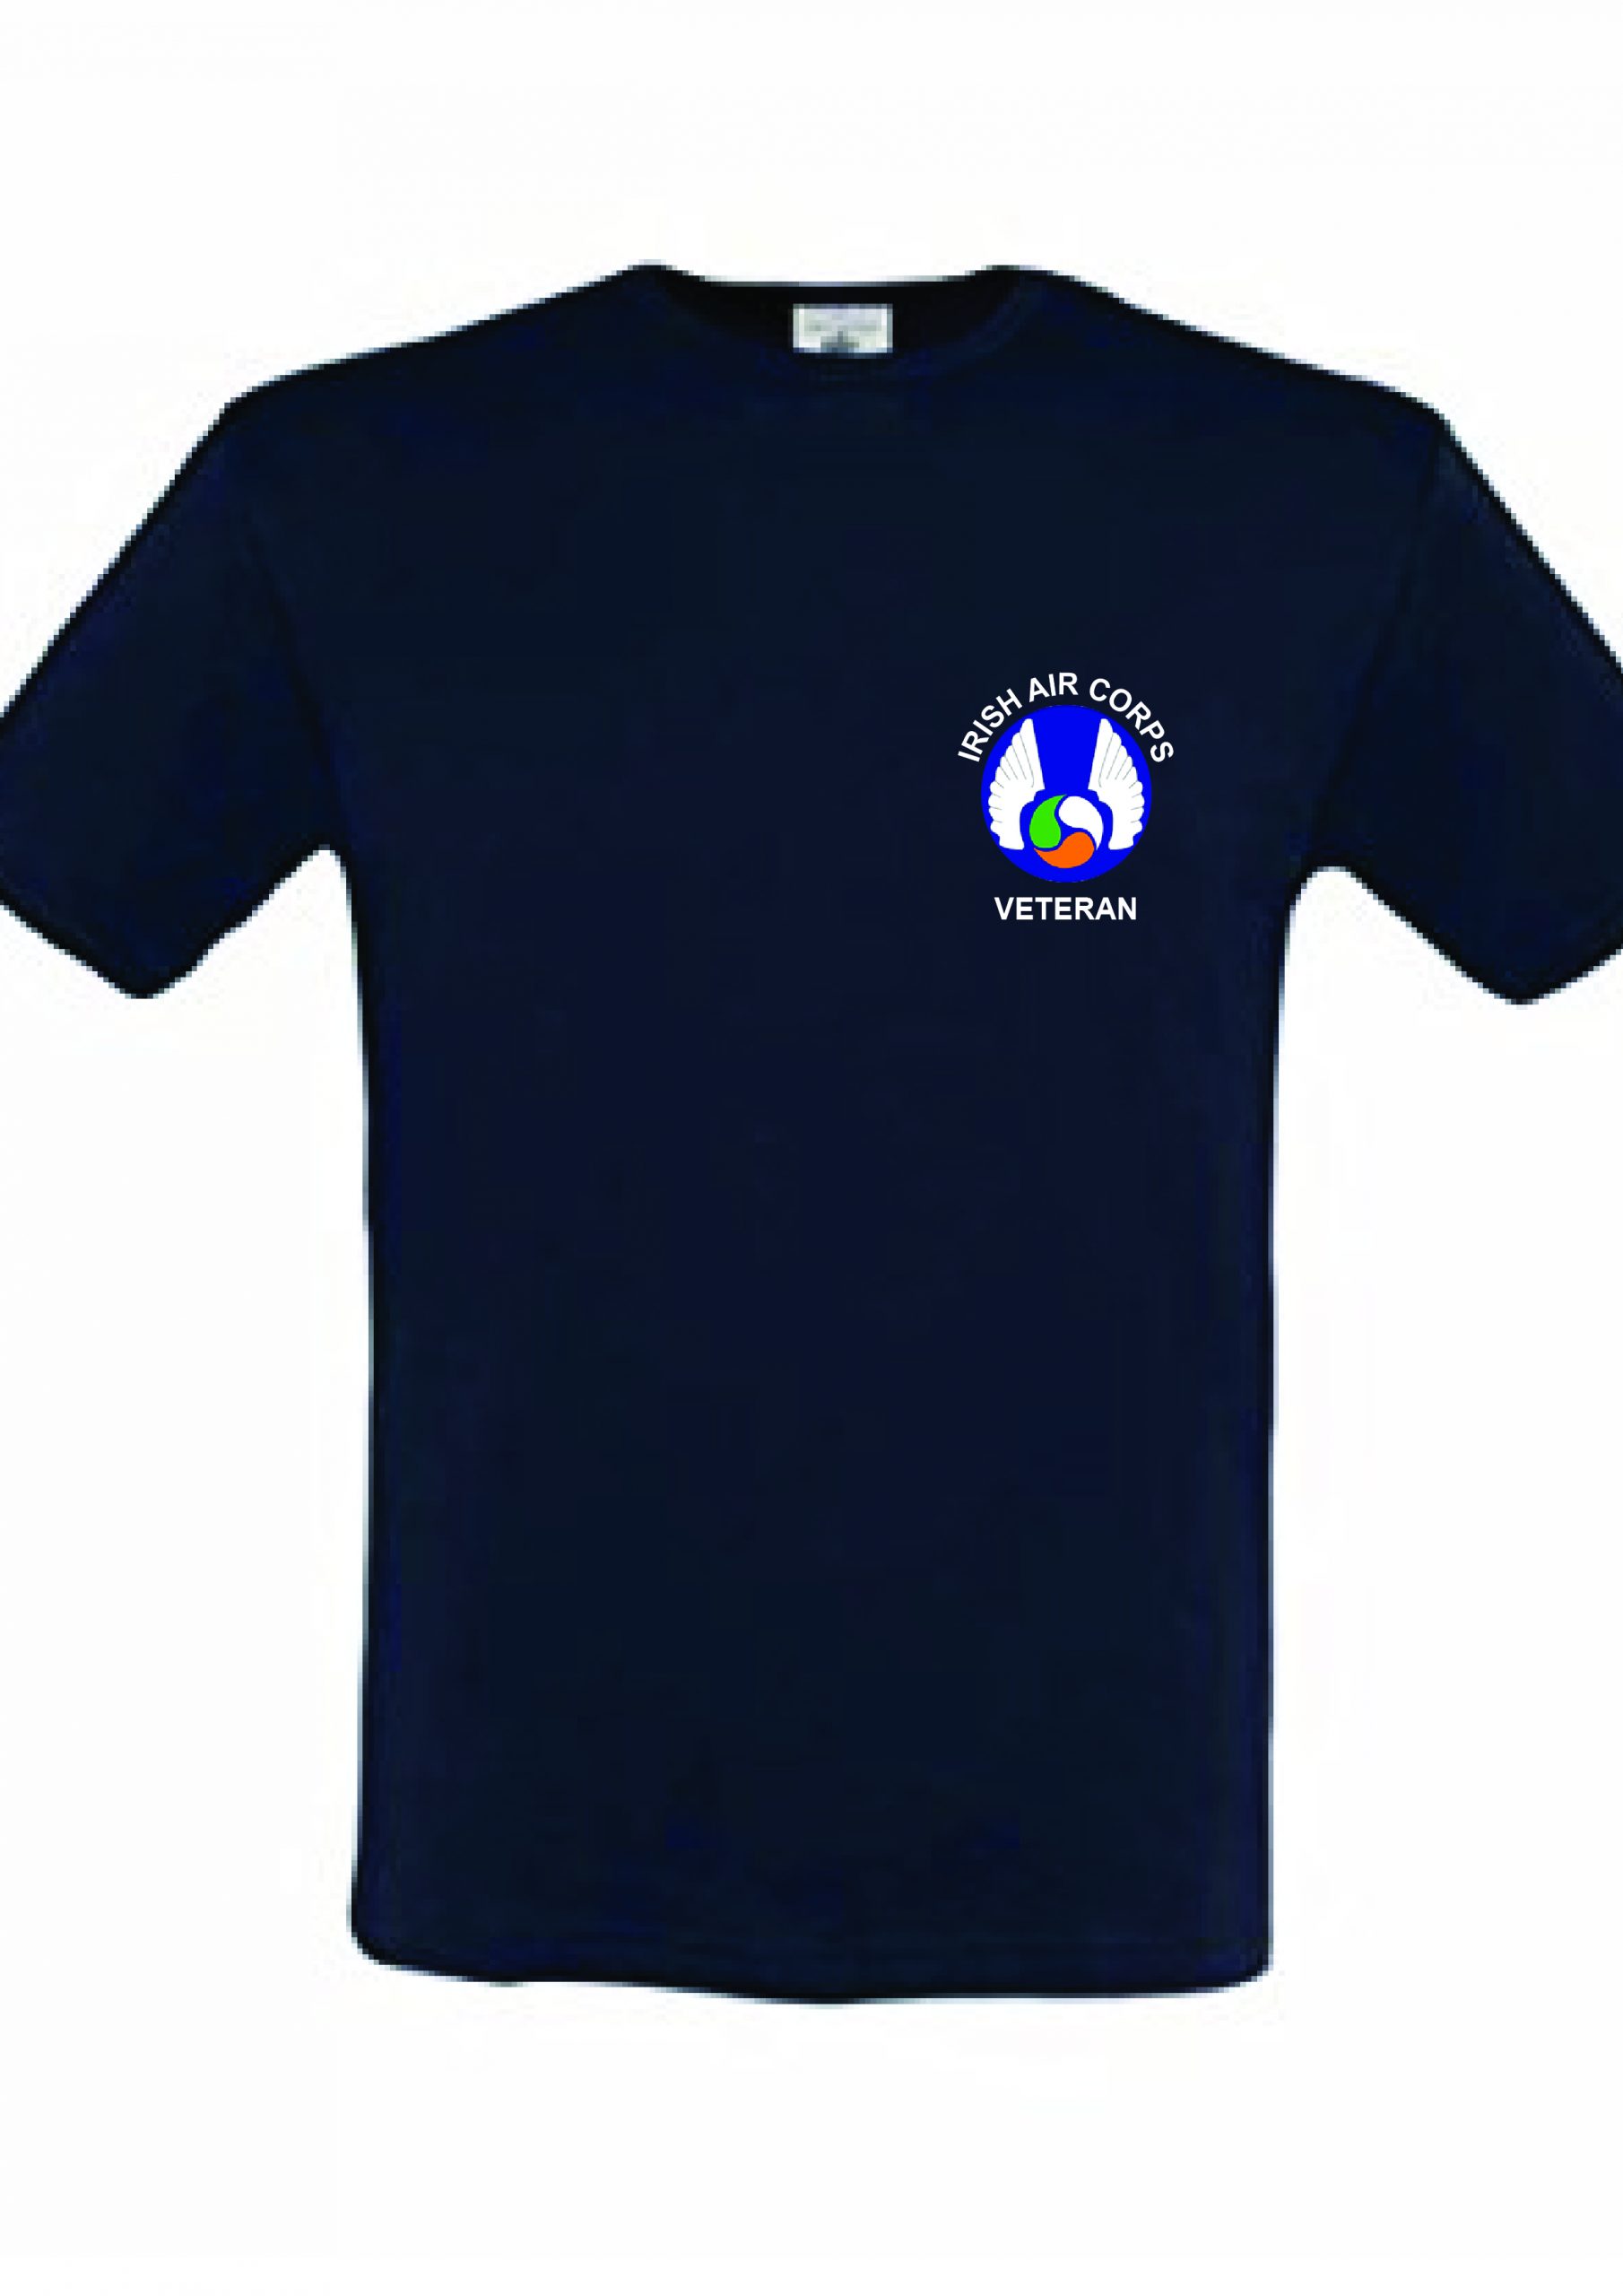 Air Corps Roundel Veteran T-Shirt-01